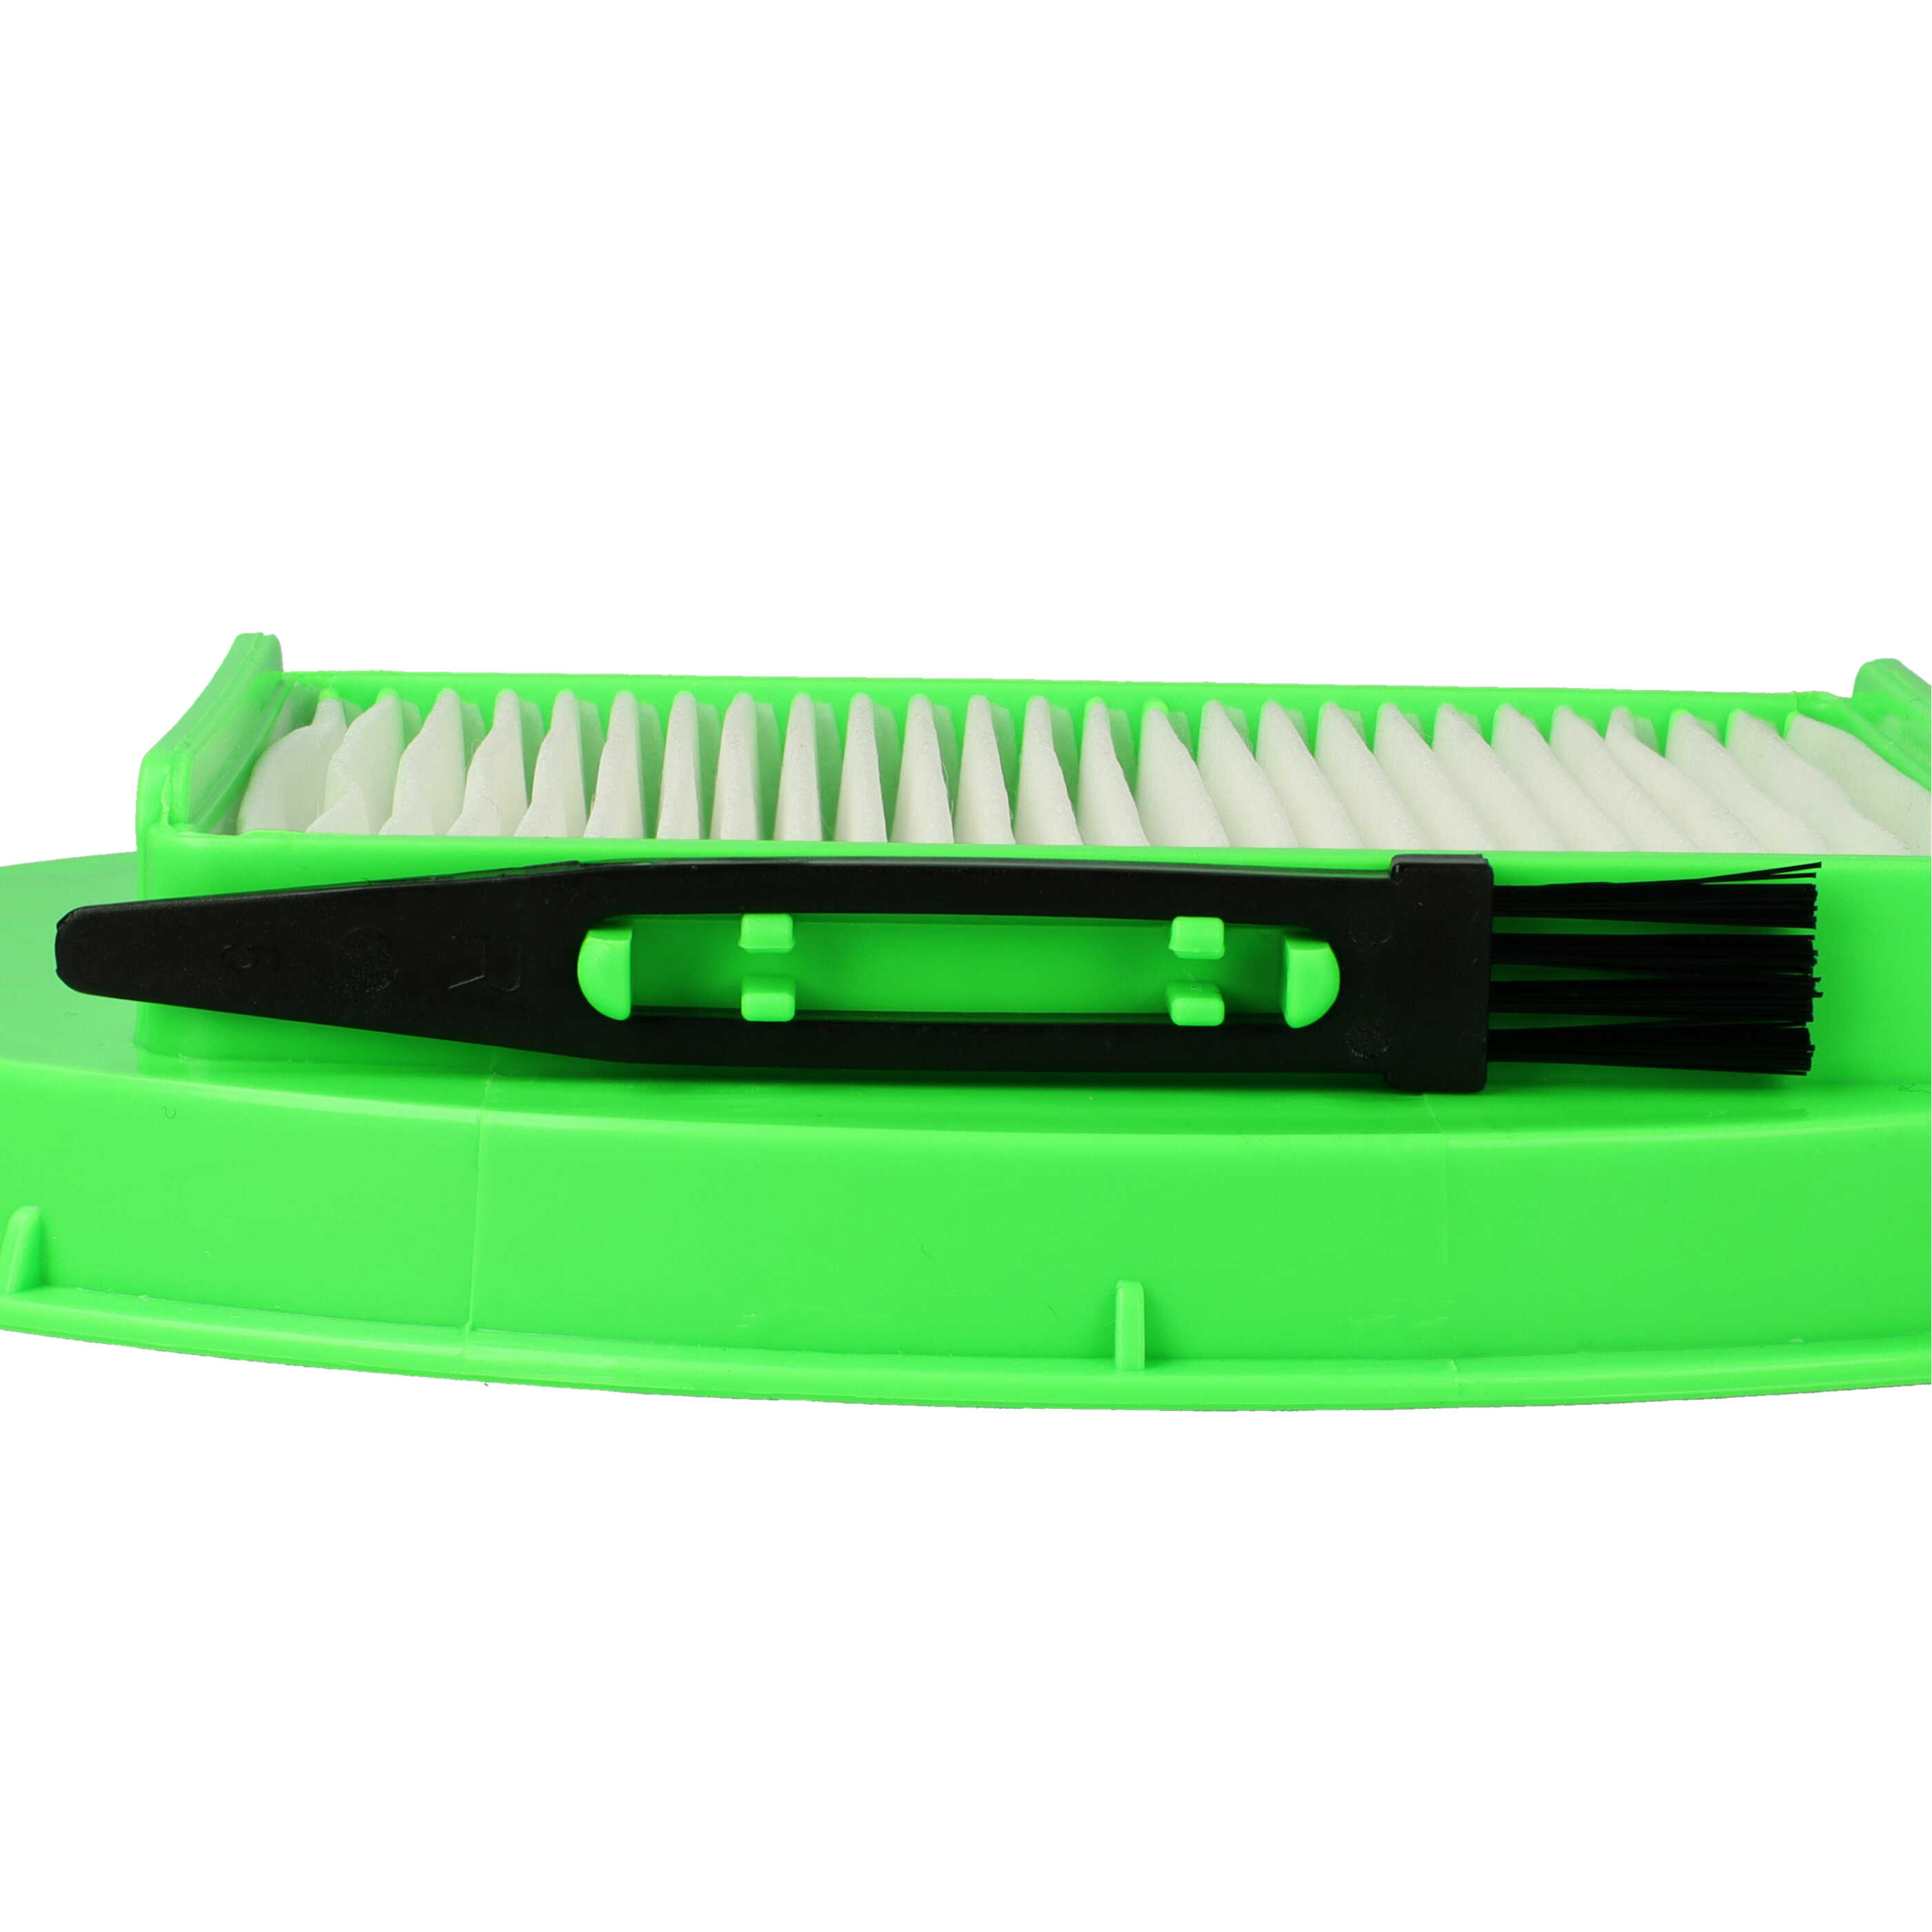 4-Part Filter/Brush Set replaces ZR005701 for Moulinex Vacuum Cleaner etc. 